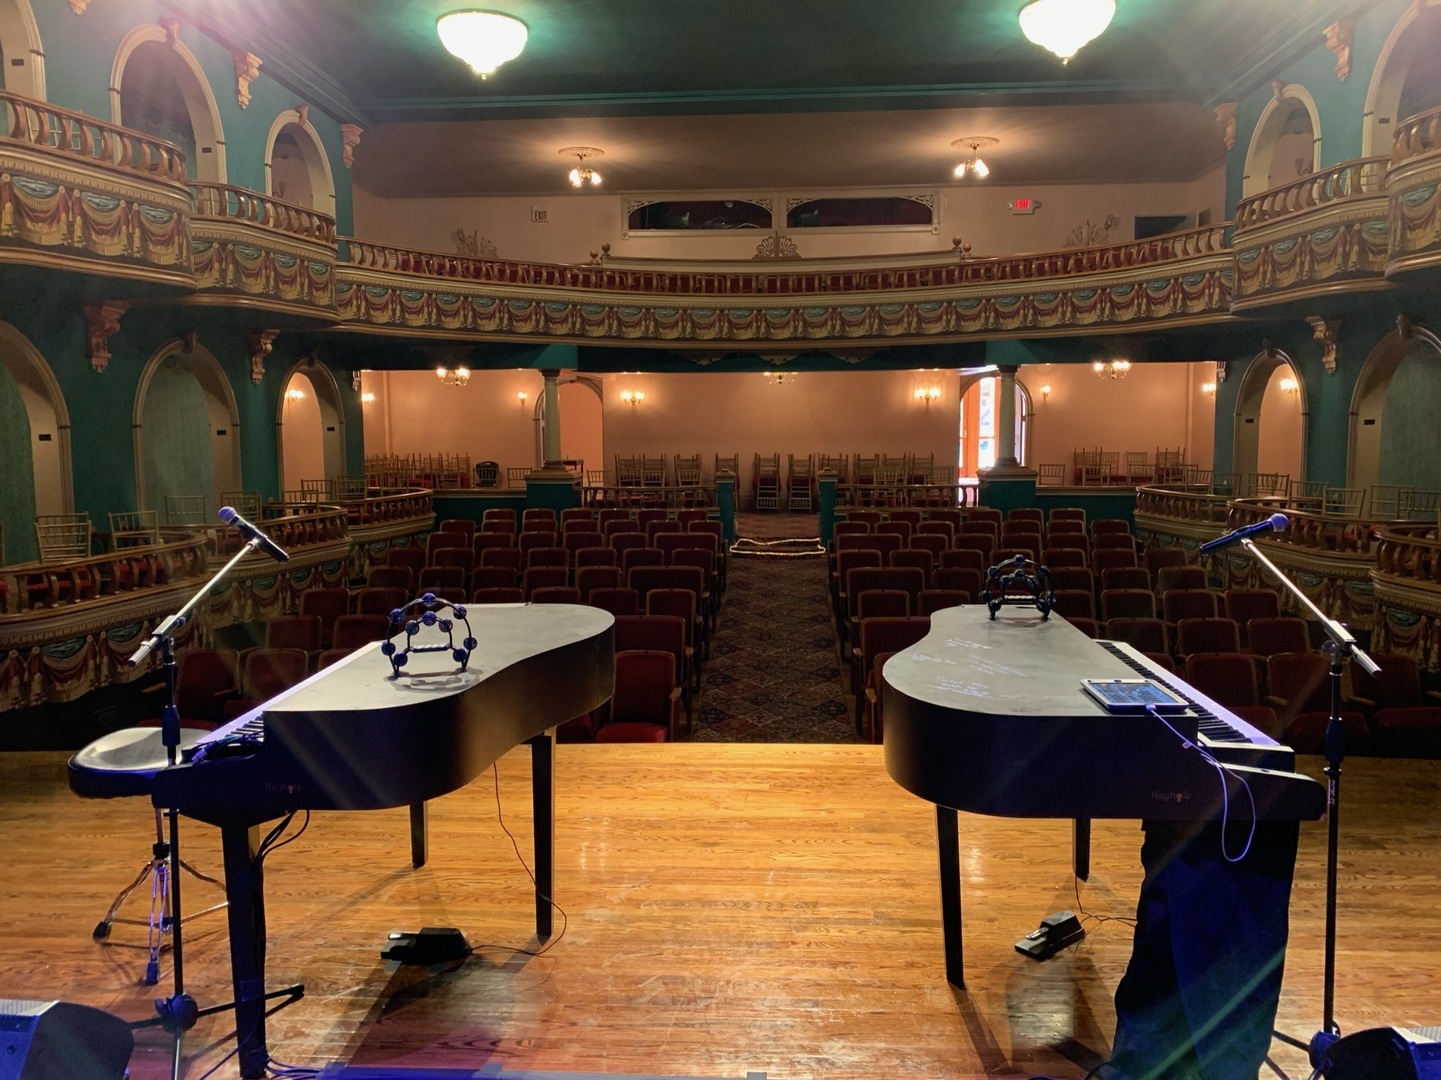 Dueling Pianos with FUN PIANOS!, Virginia, Minnesota, United States